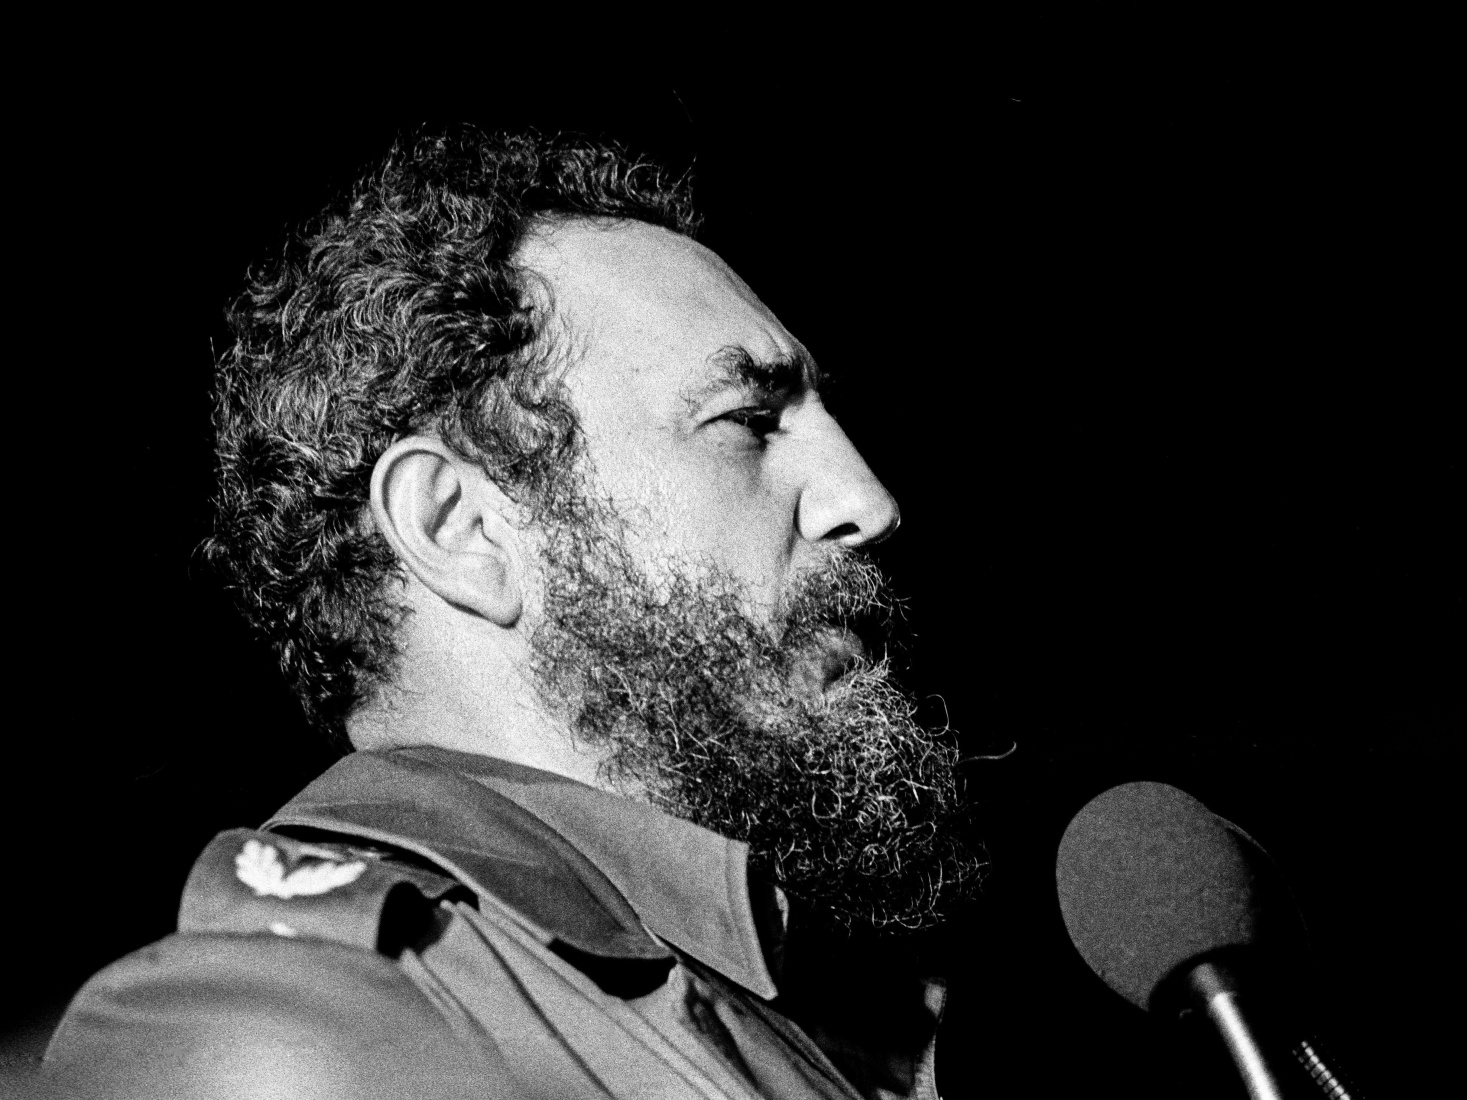 Cuban leader, dictator, Fidel Castro, photo by Marcelo Montecino.